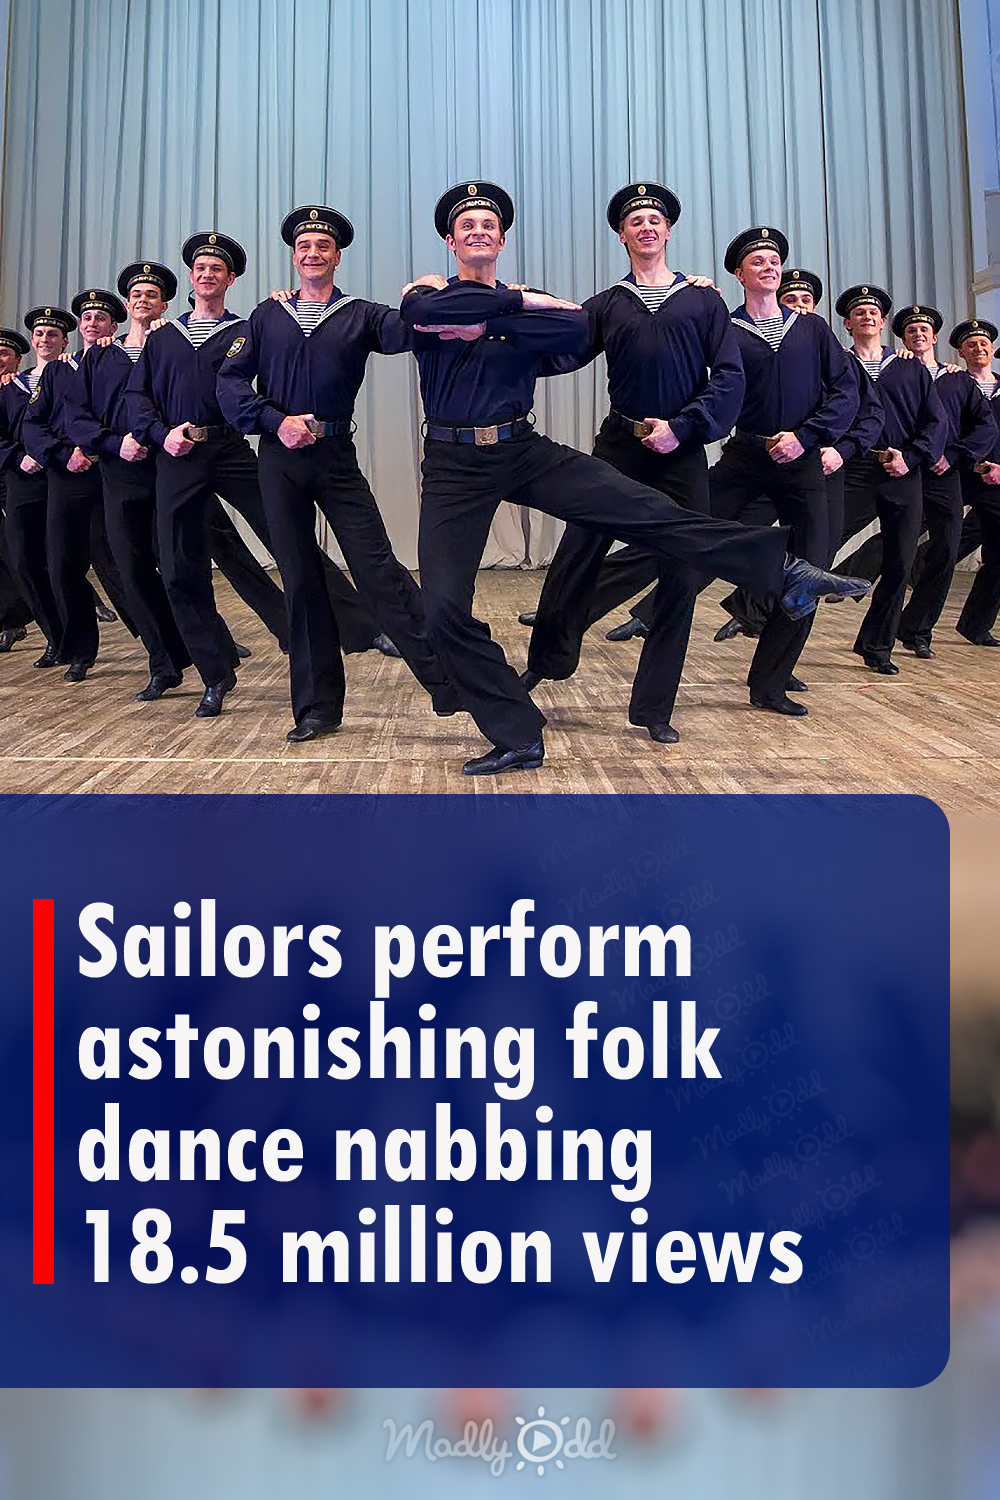 Sailors perform astonishing folk dance nabbing 18.5 million views